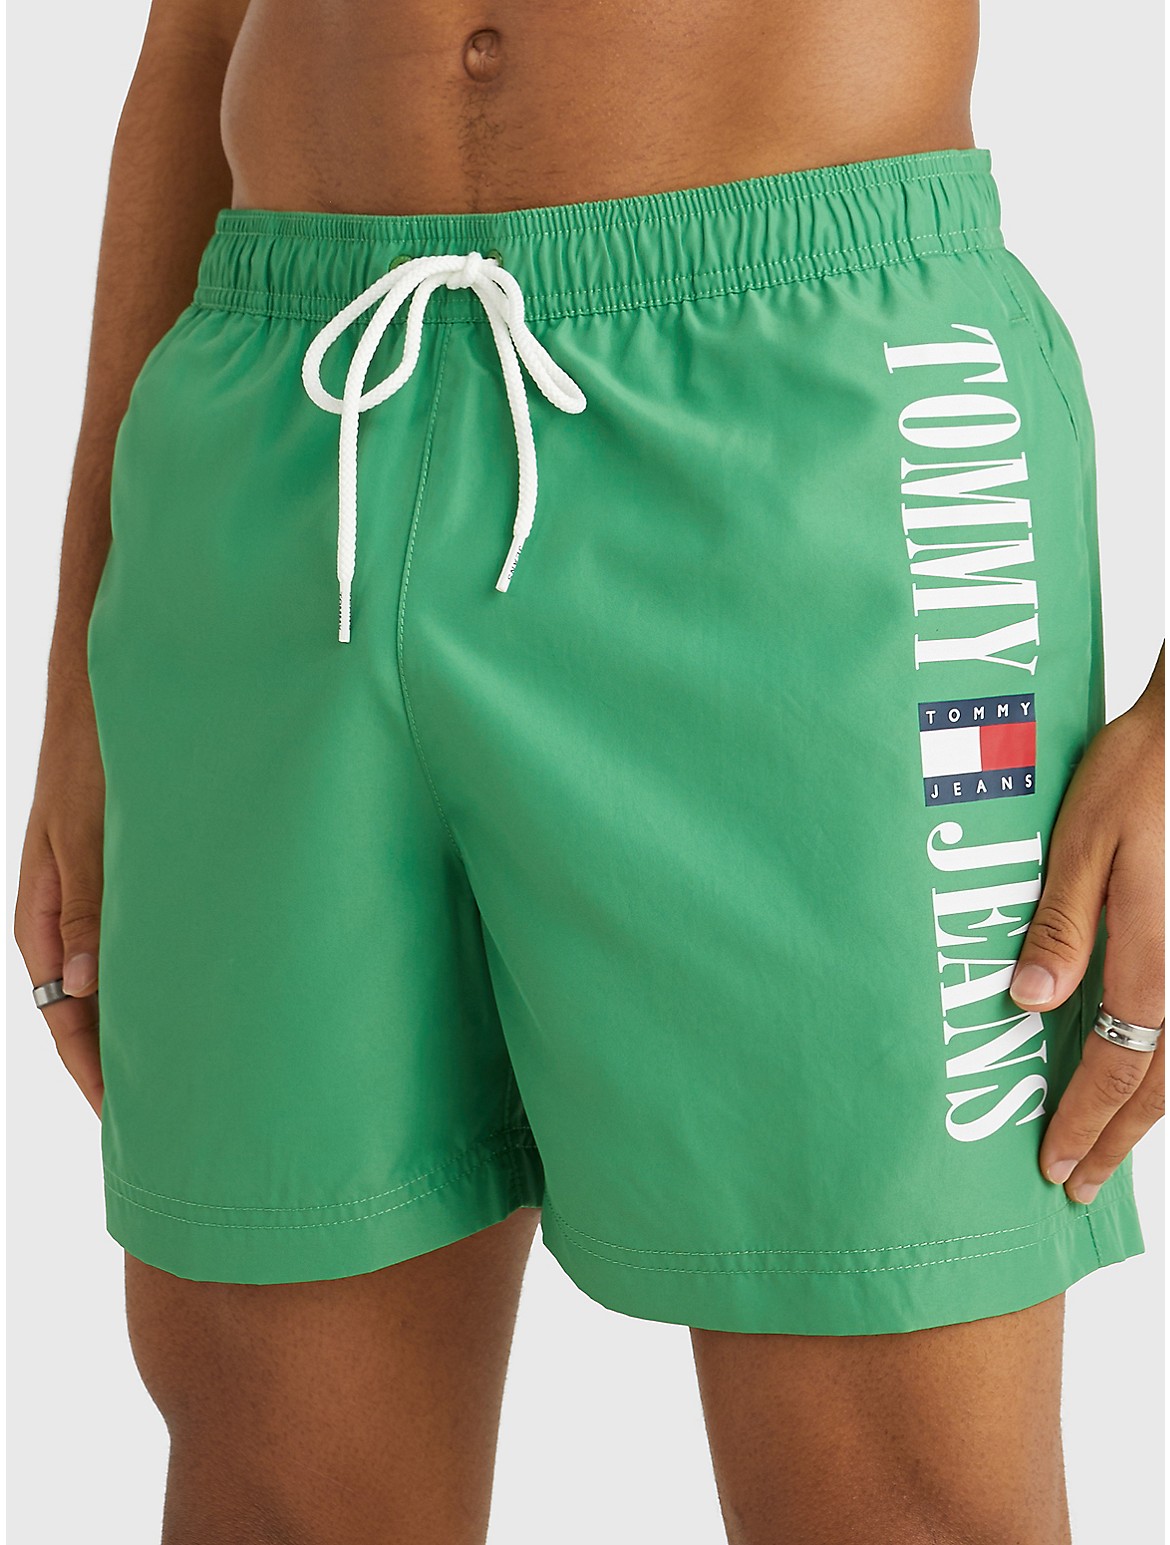 Tommy Hilfiger Men's Logo Print 7" Swim Trunk - Green - XXL